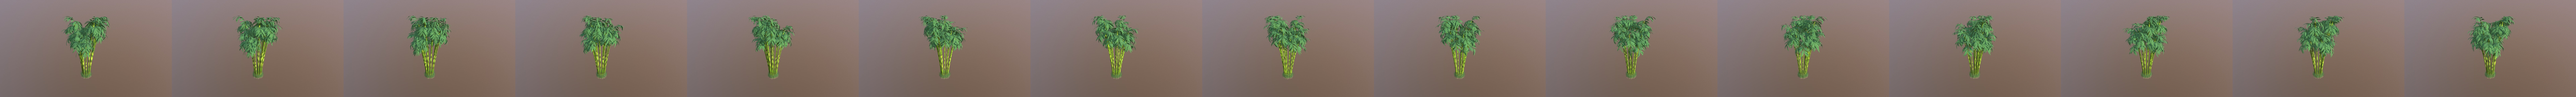 Bamboo Tree Download Free 3d Model By Tojamerlin Tojamerlin D